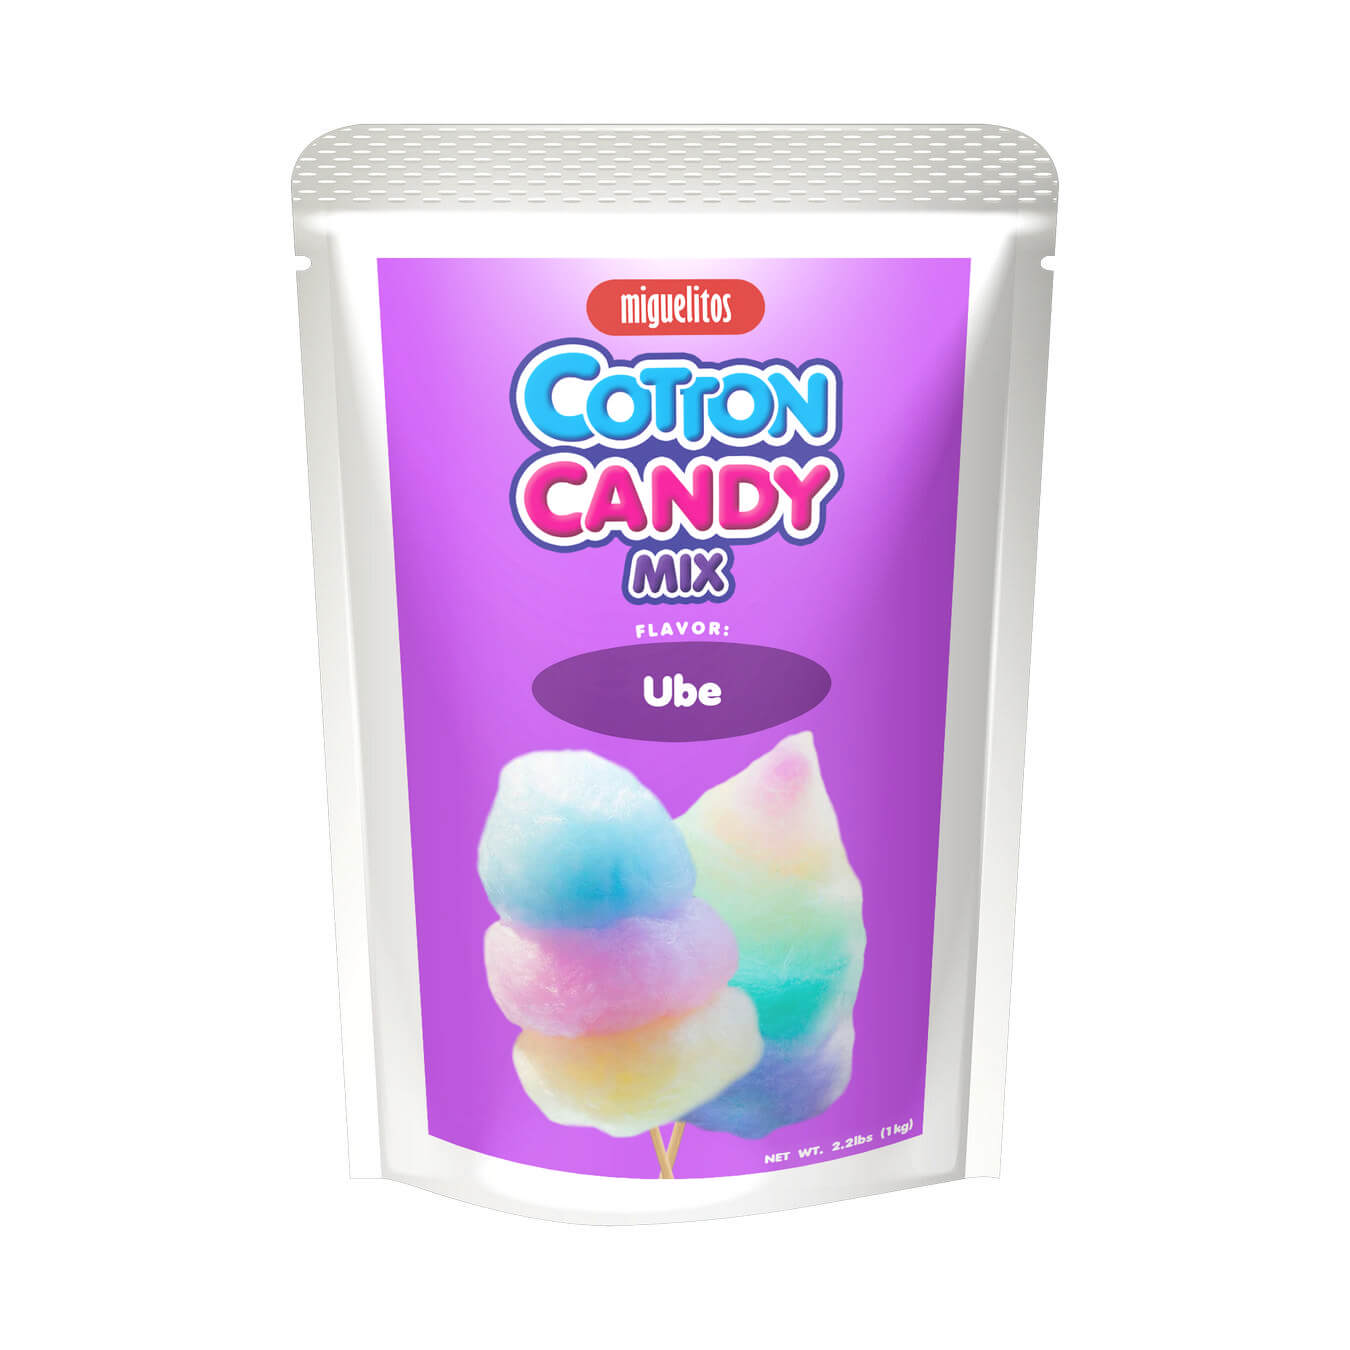 Cotton Candy Mix Ube